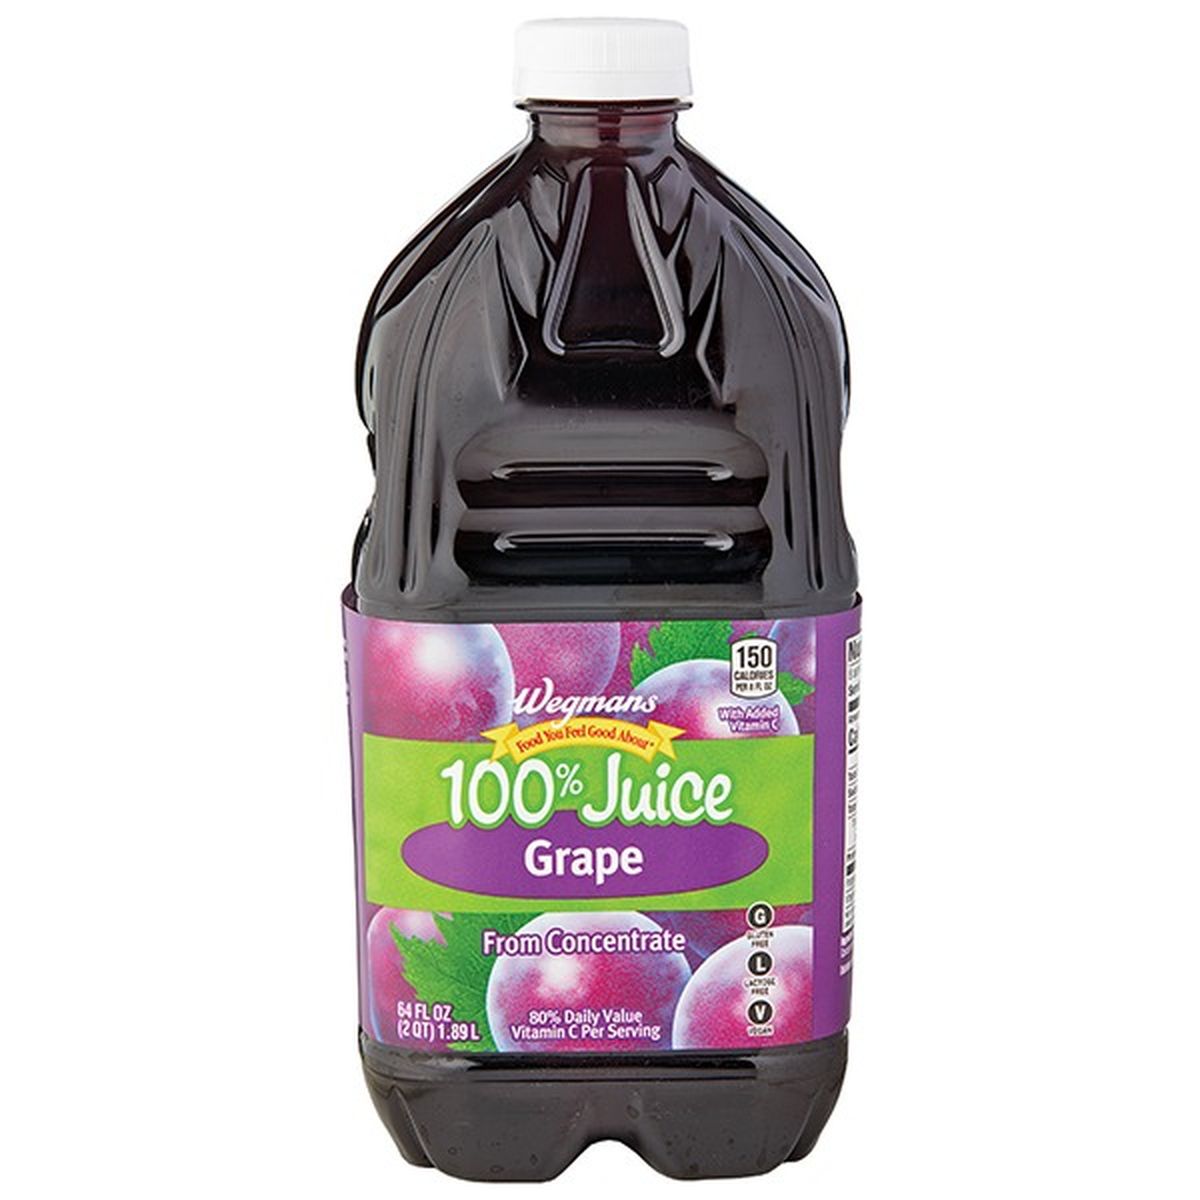 Calories in Wegmans 100% Juice, Grape